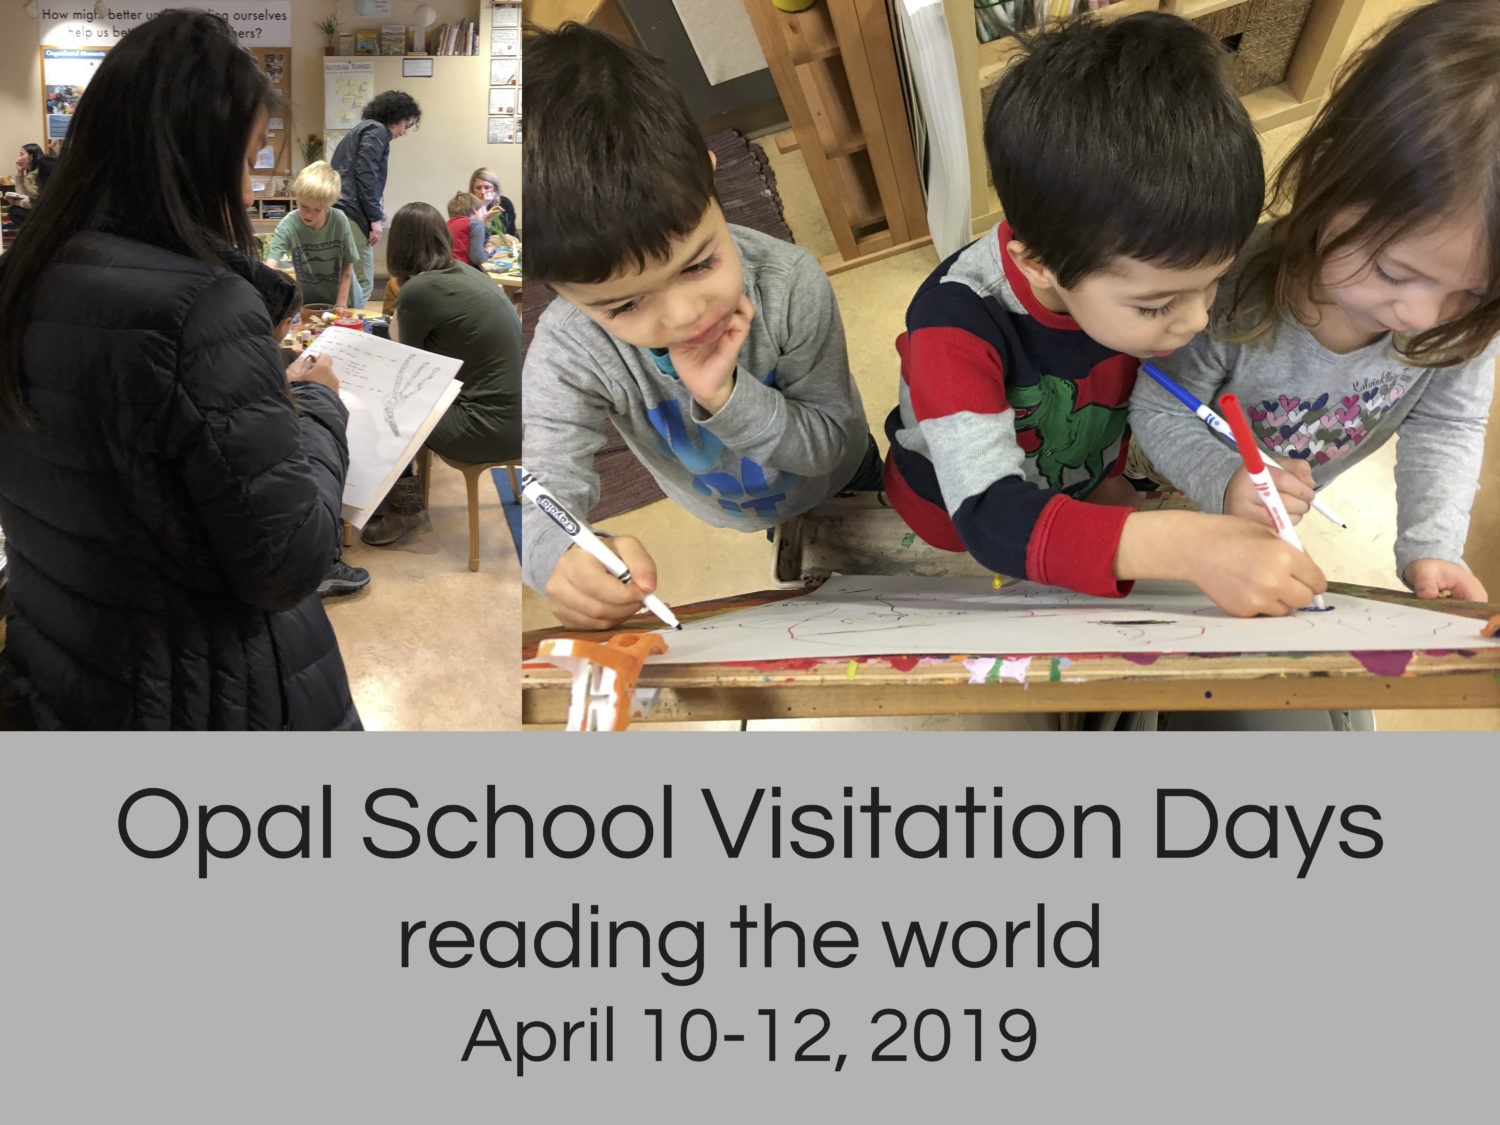 Opal School Visitation Days 2019: Reading the World